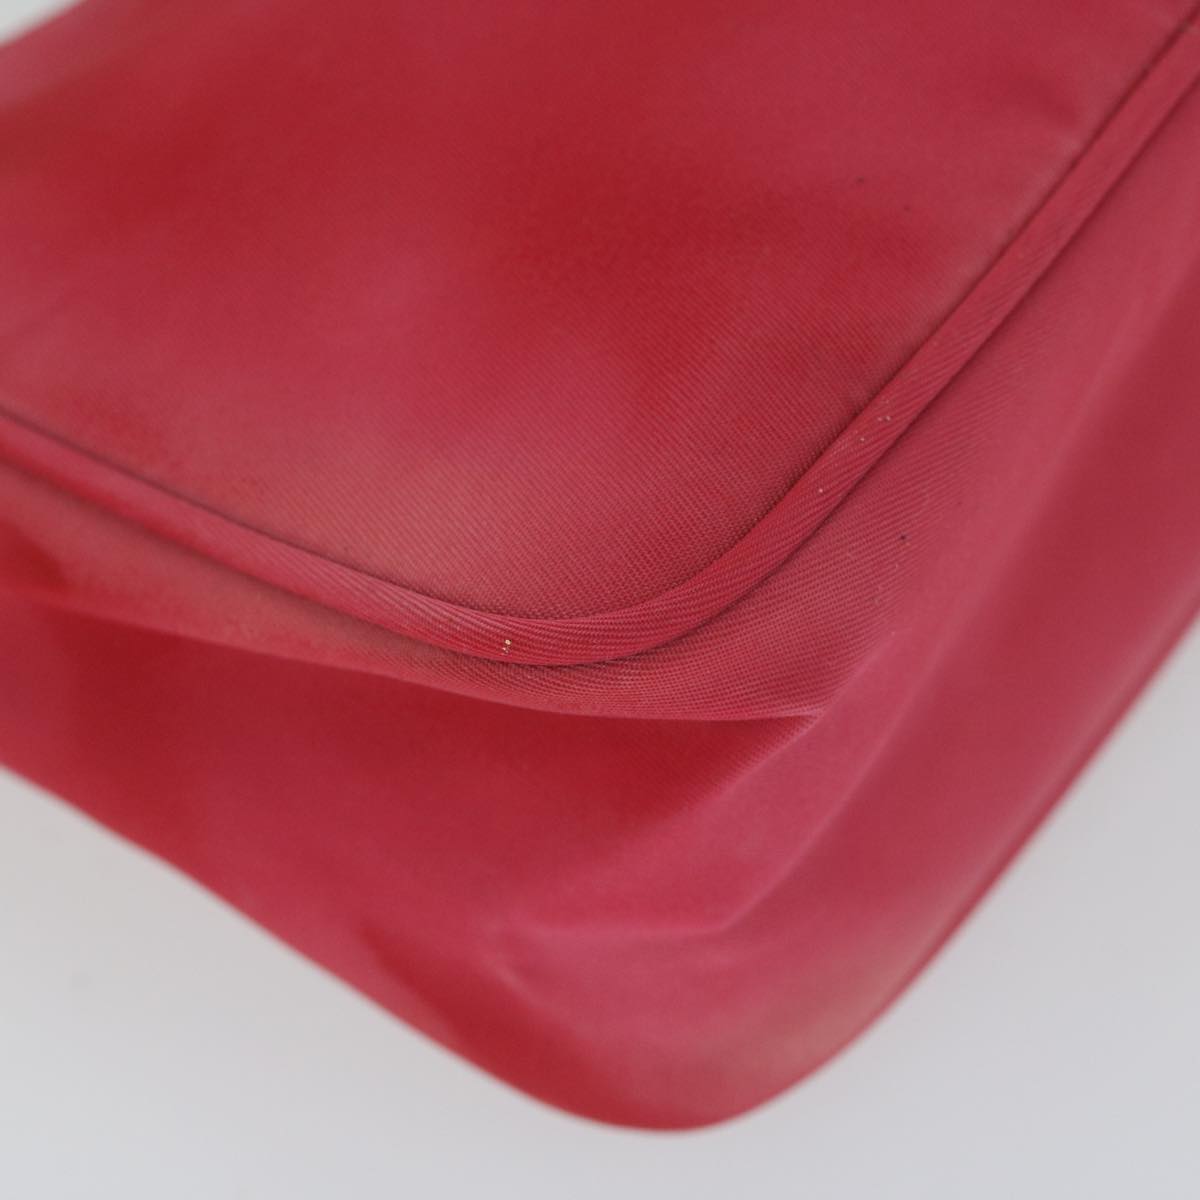 PRADA Hand Bag Nylon Pink Auth 61293